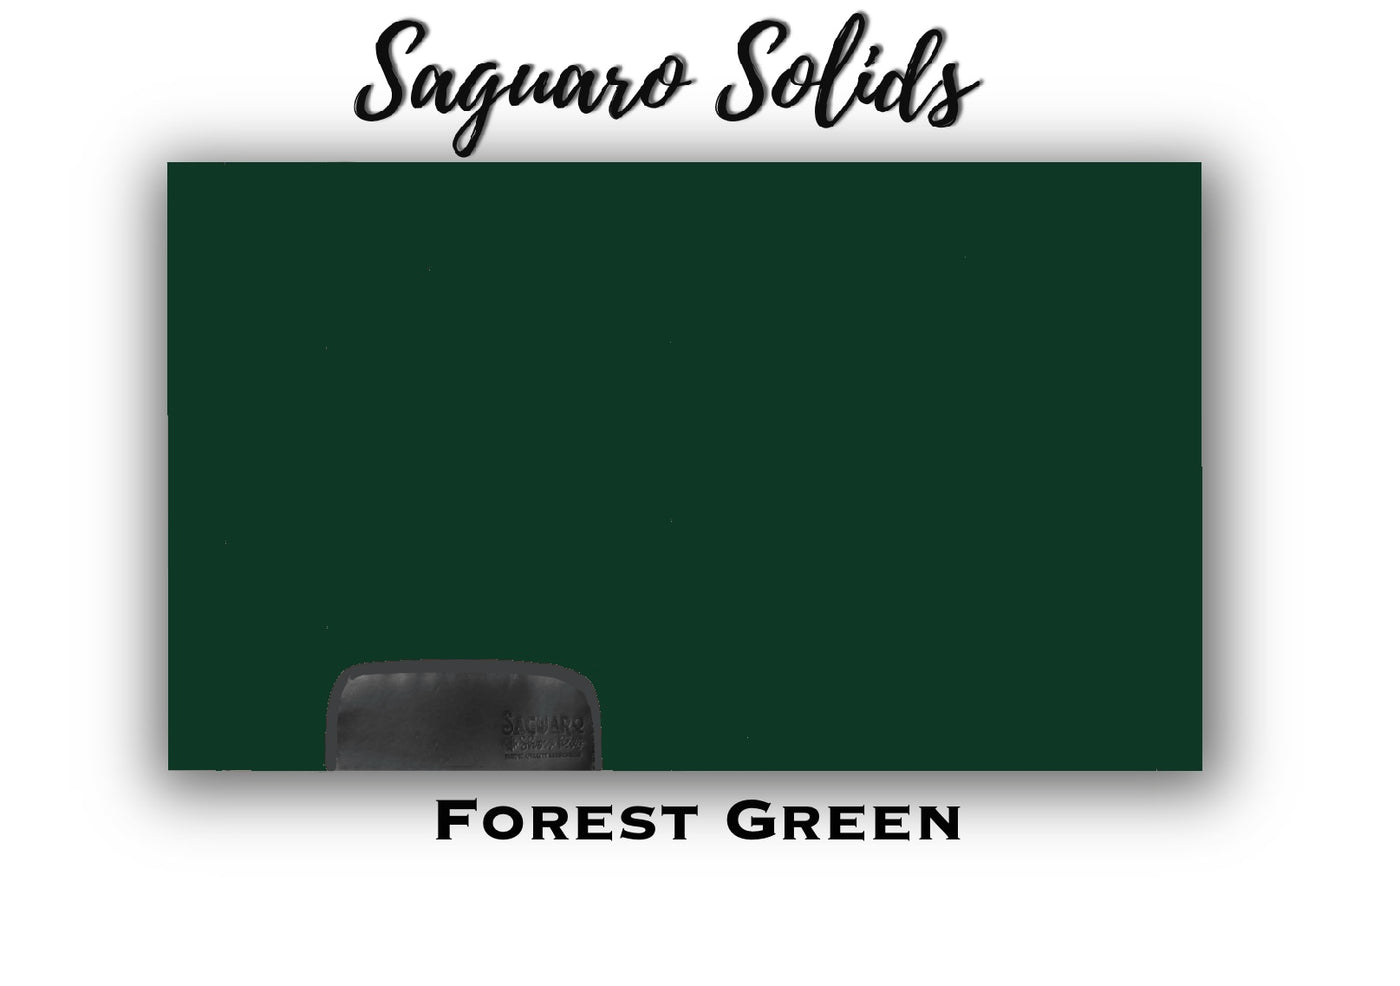 Saguaro Solid "Forest Green" Show Pad (SEMI-CUSTOM)